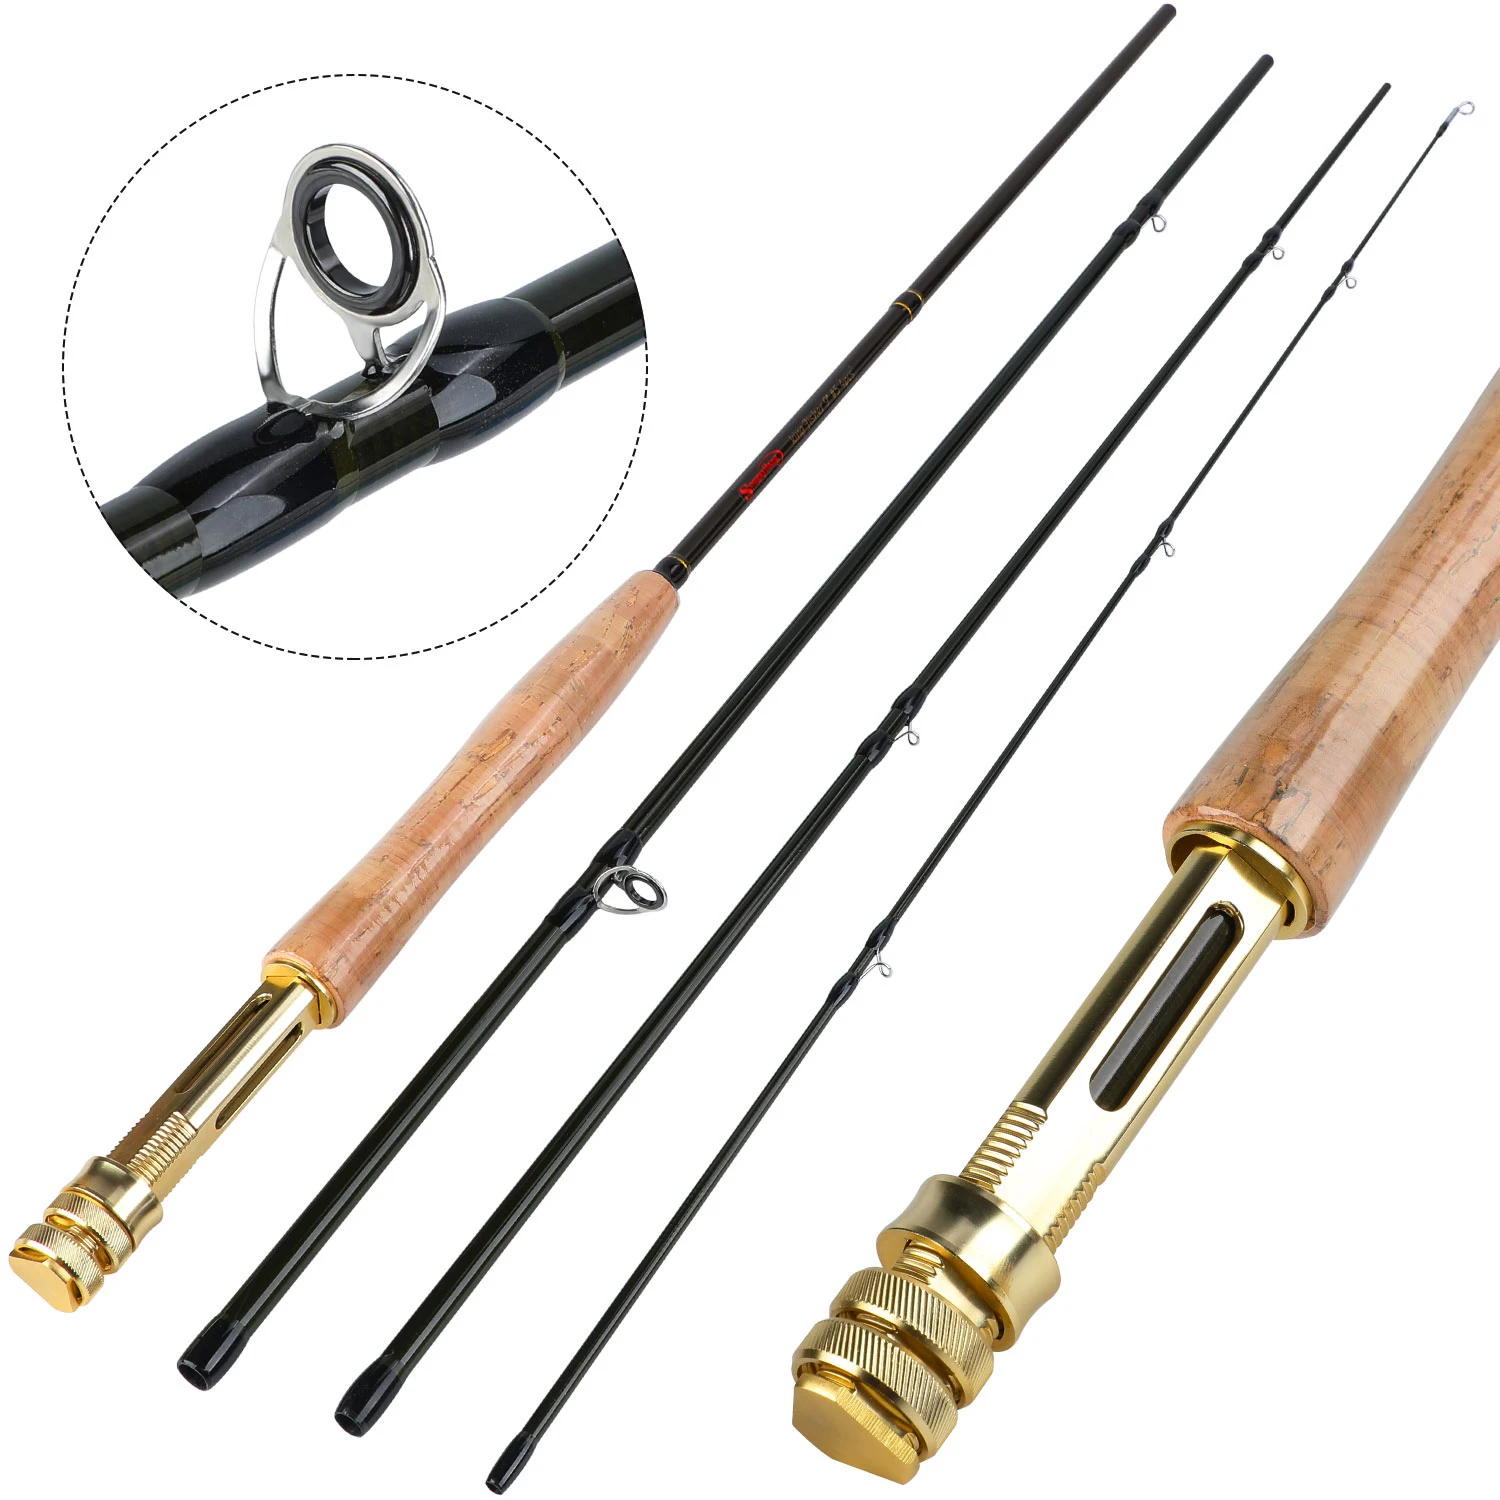 Sougayilang 4 Section Carbon Fiber Fly Fishing Rod Ultralight Weight Fly Fishing Rod Lake River Fishing Tackle